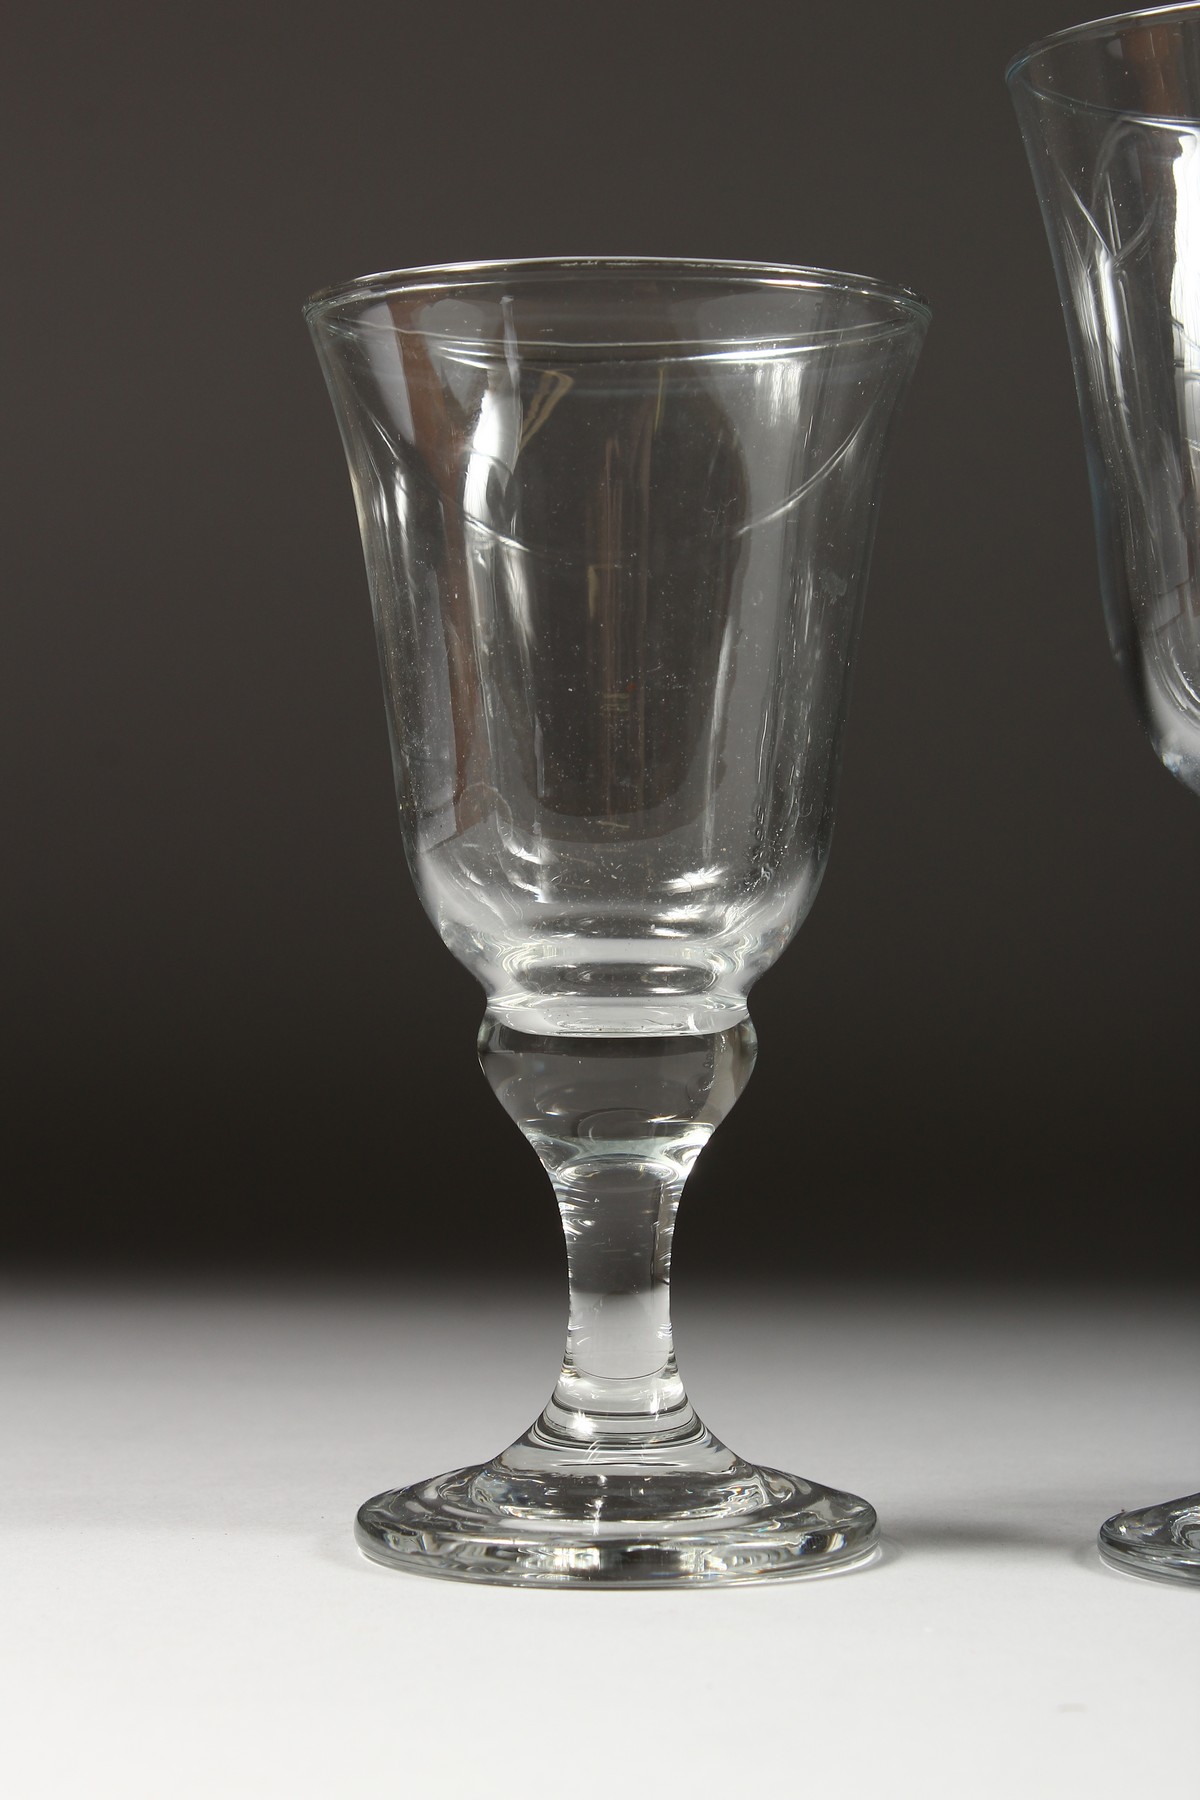 SIX HEAVY WINE GLASSES in three sizes. - Image 2 of 4